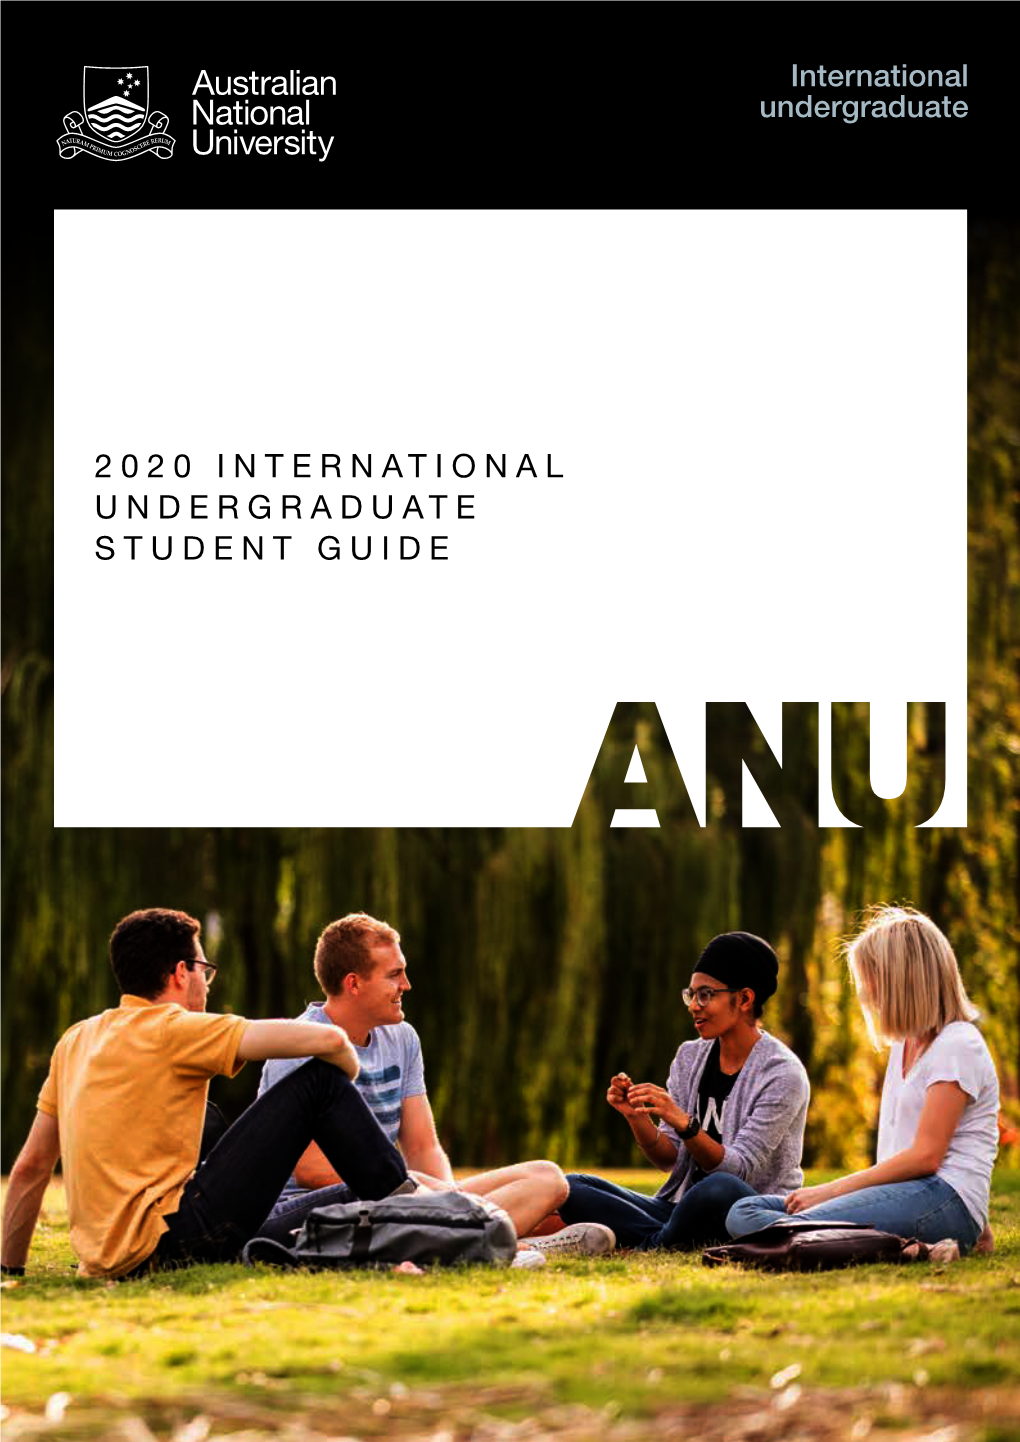 2020 International Undergraduate Student Guide Contents